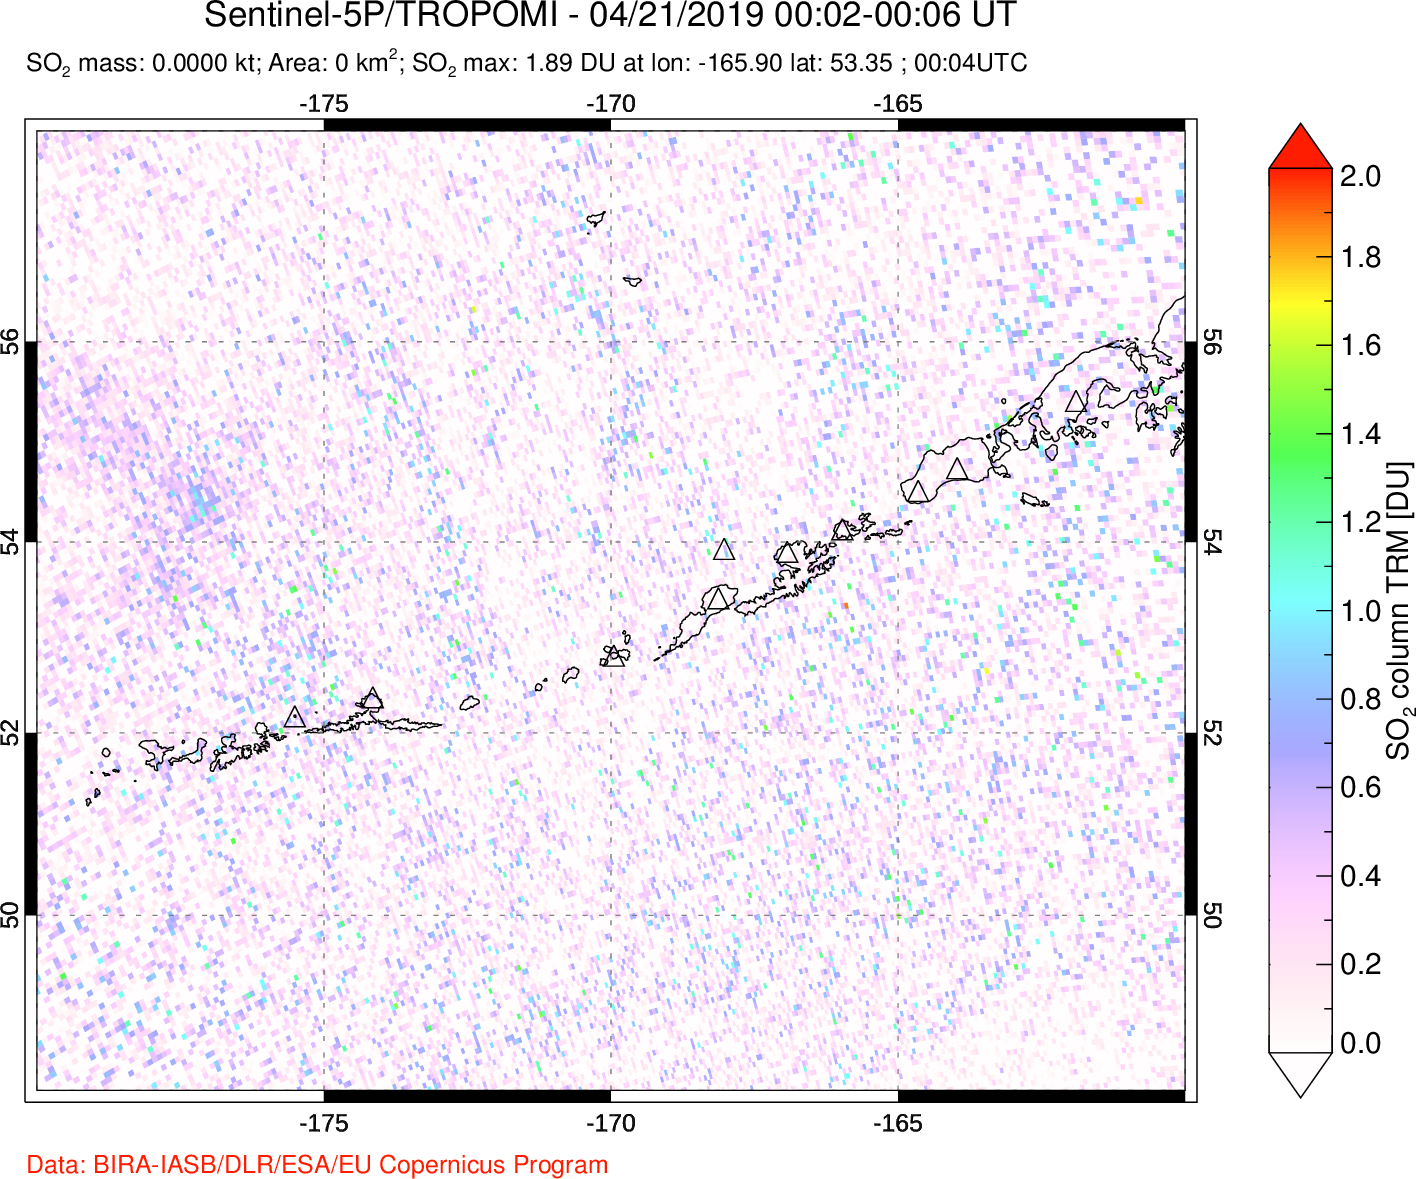 A sulfur dioxide image over Aleutian Islands, Alaska, USA on Apr 21, 2019.